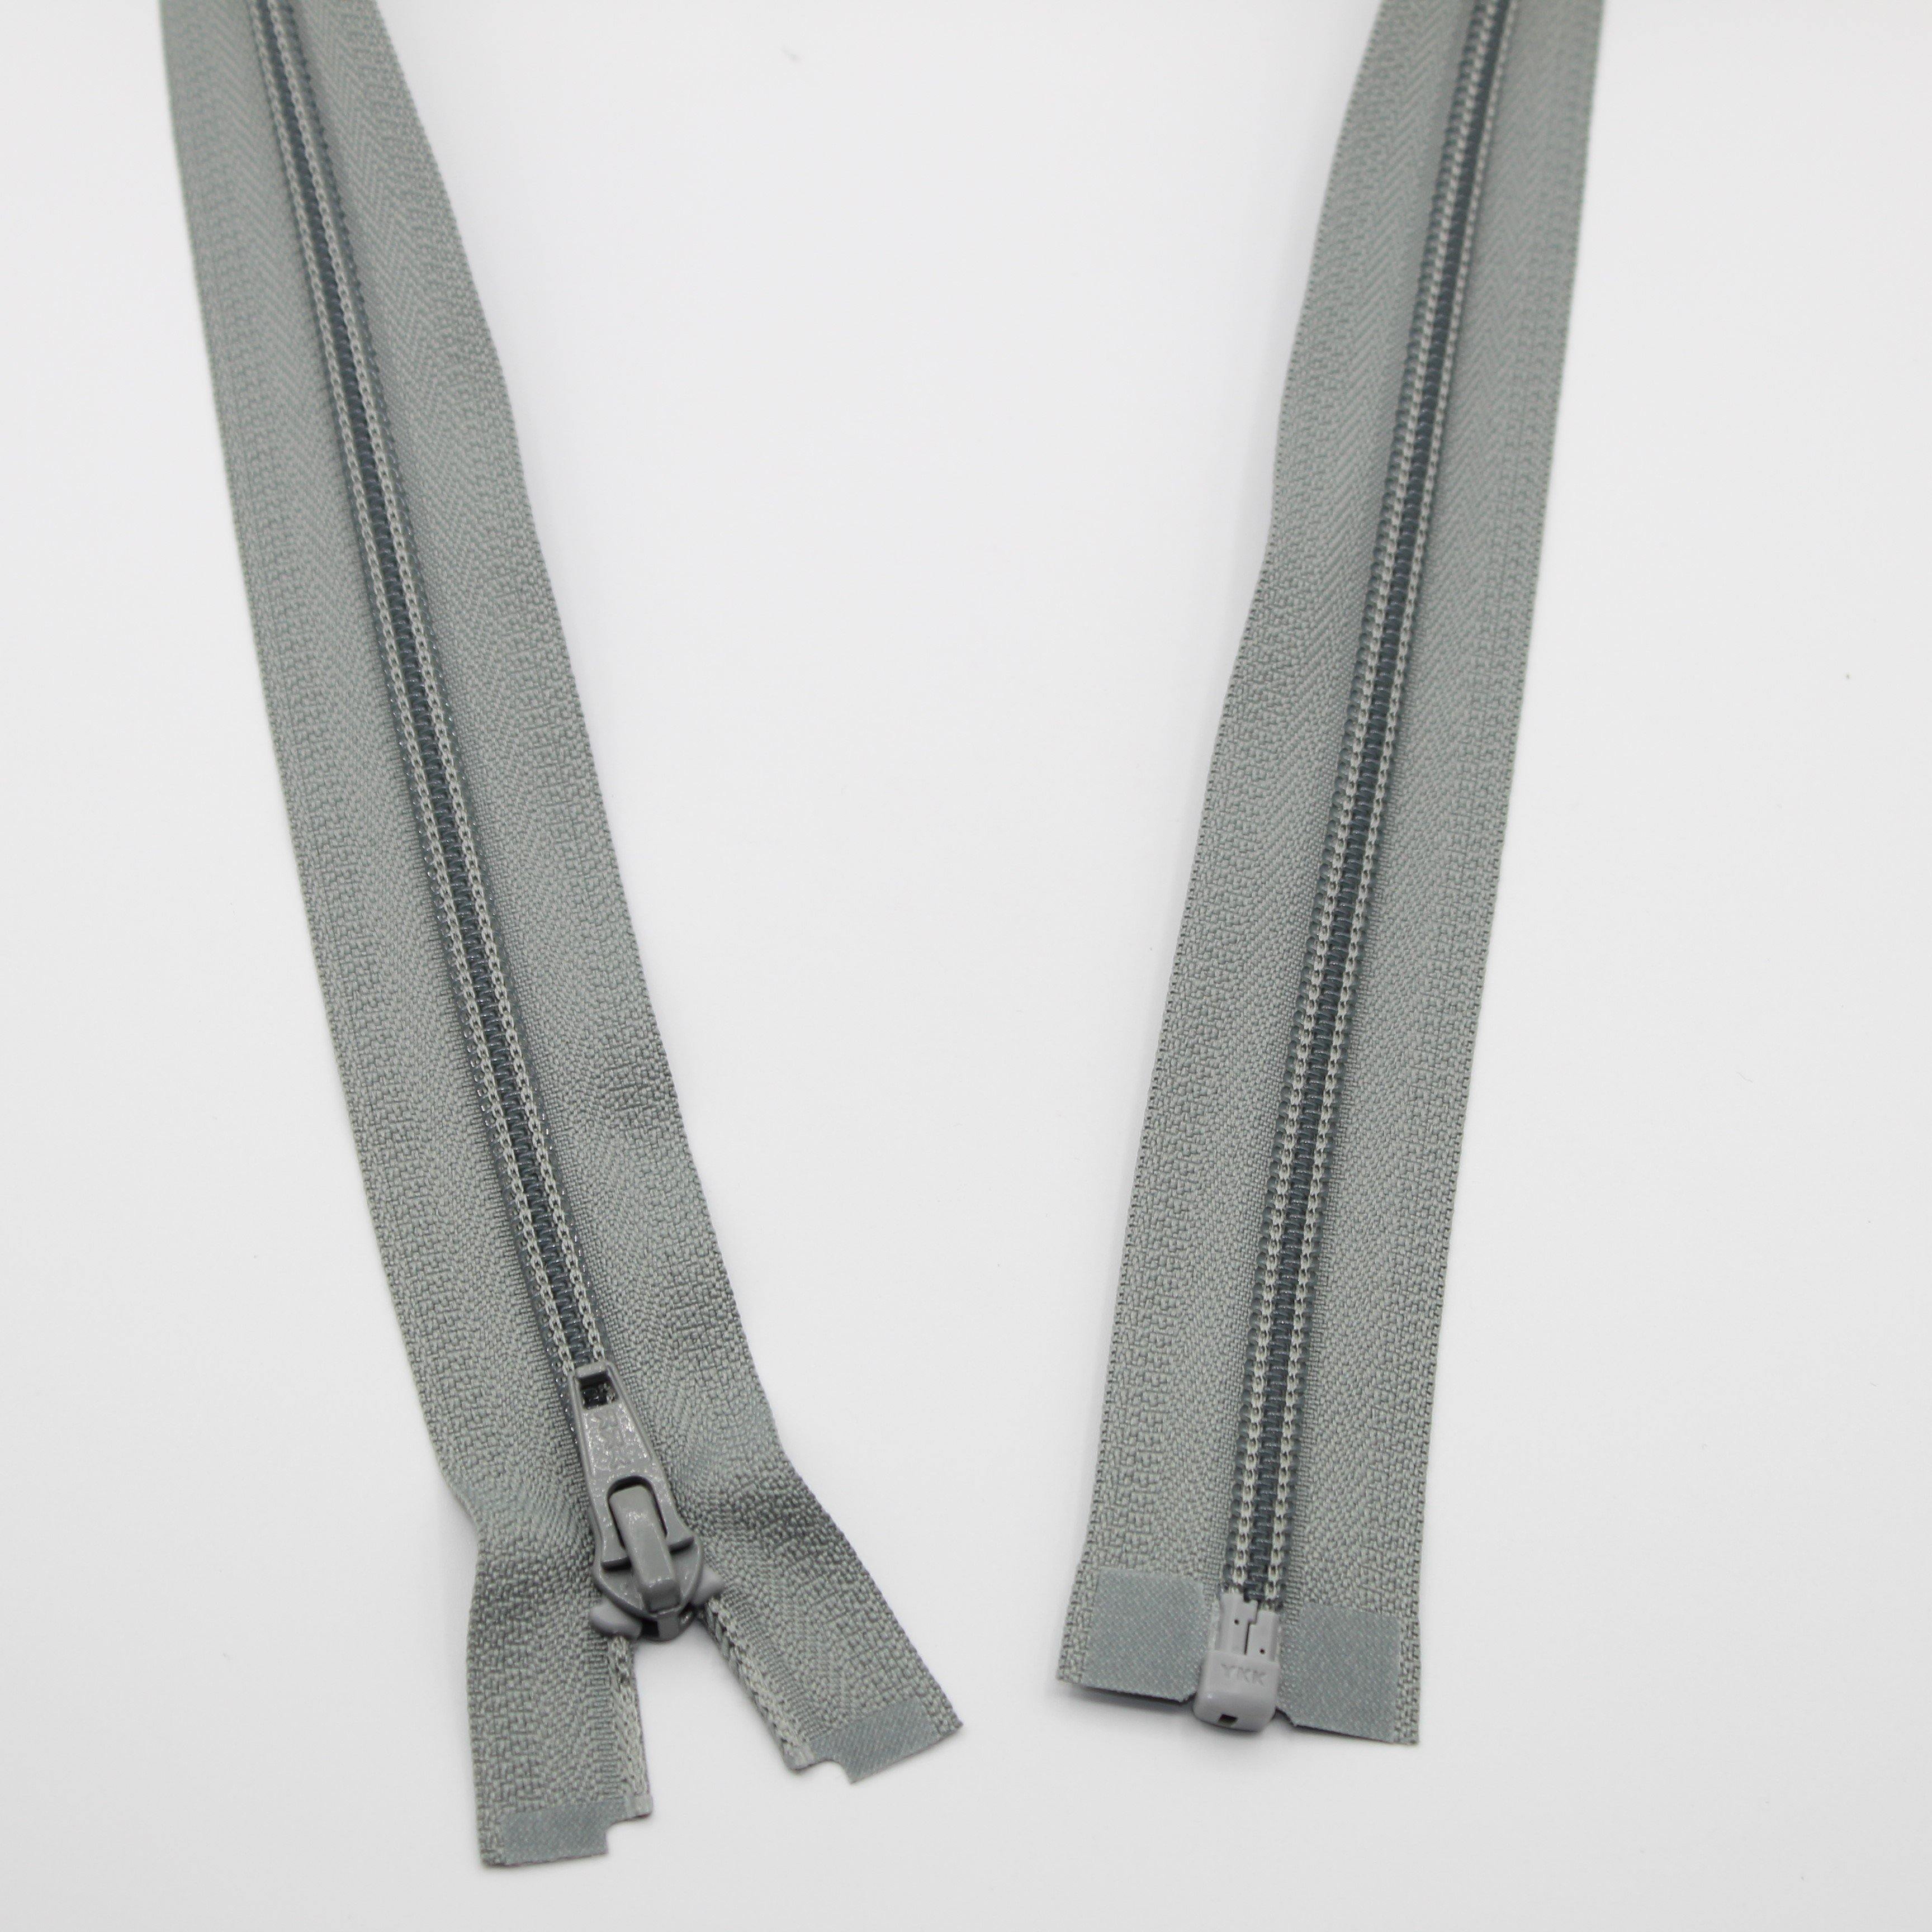 YKK - 80cm Nylon Zipper for Jackets - One Way Open end - ACCESSOIRES LEDUC